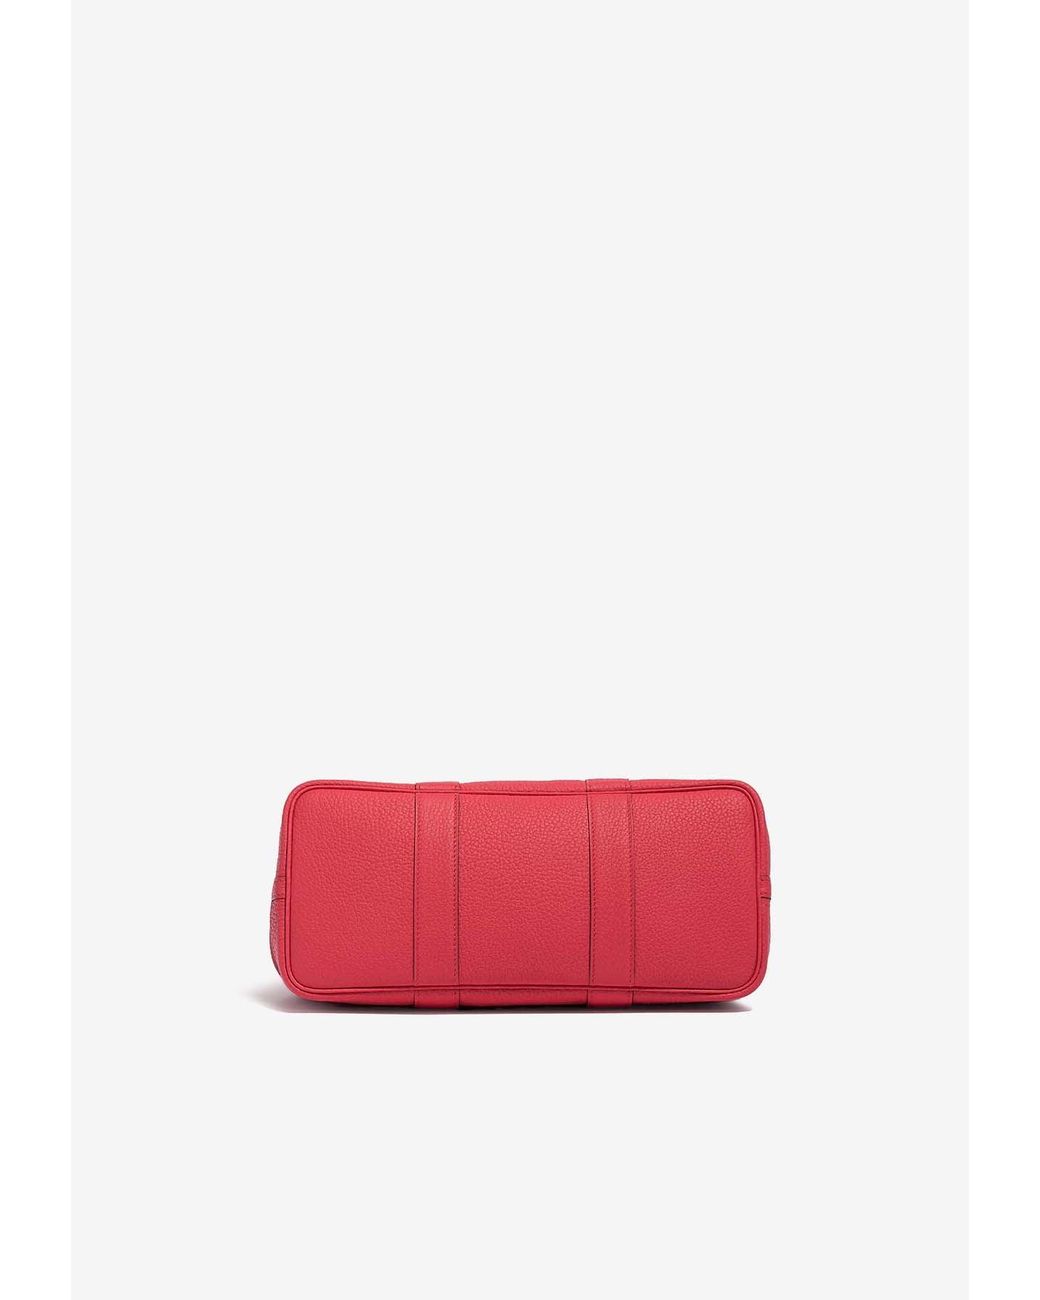 Hermès Garden Party Rouge Grenat Negonda and Bougainvillie Toile militaire 30 TPM Palladium Hardware, 2022 (Like New), Red/Pink Womens Handbag